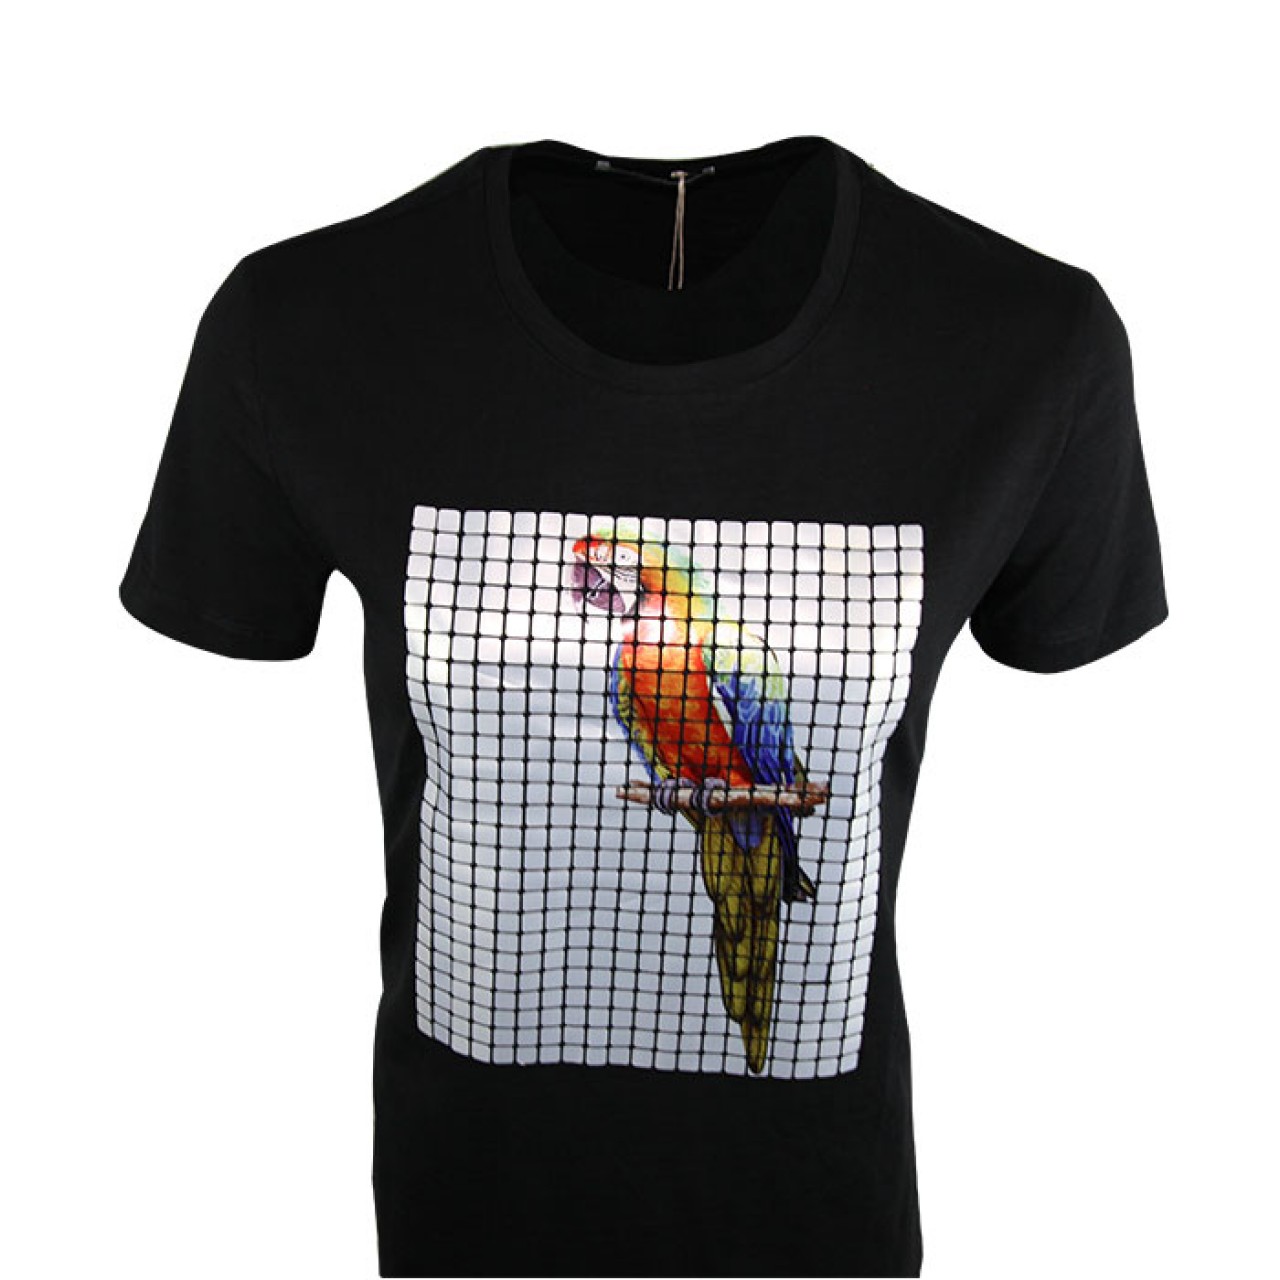 Men's Black With Animation Parrot Best Design T Shirts